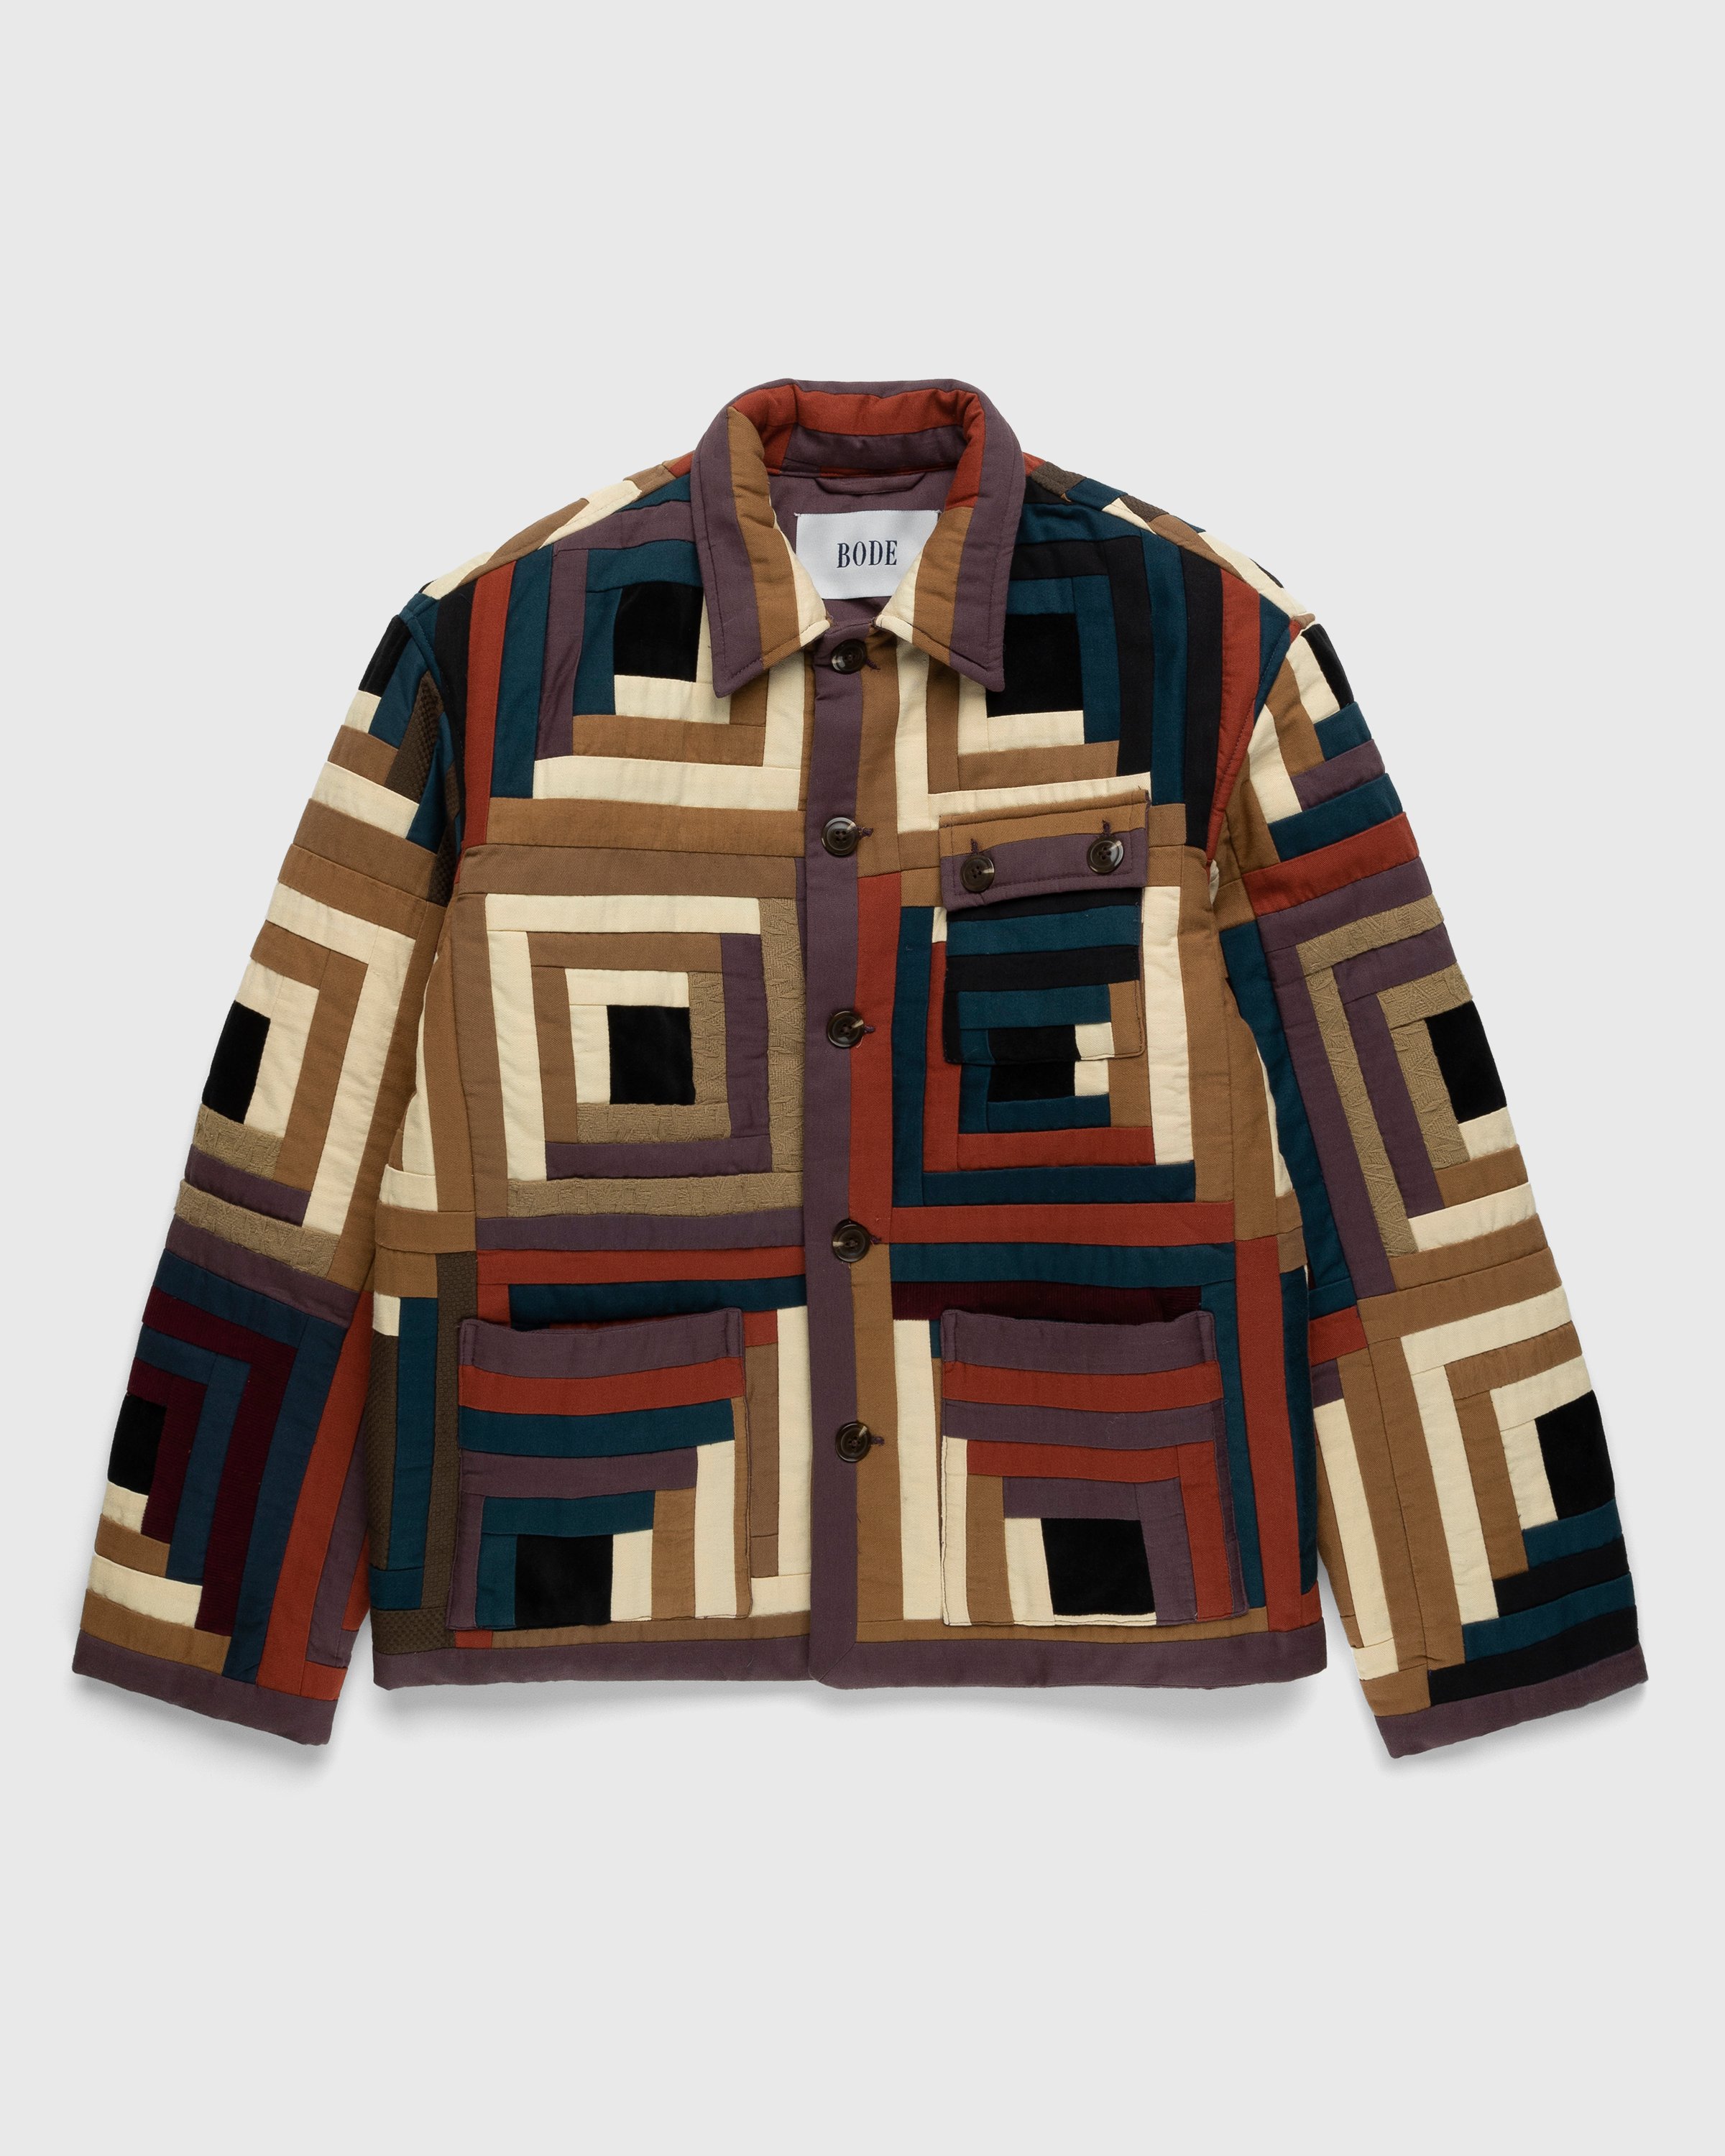 Bode - Log Cabin Quilted Workwear Jacket Multi - Clothing - Multi - Image 1